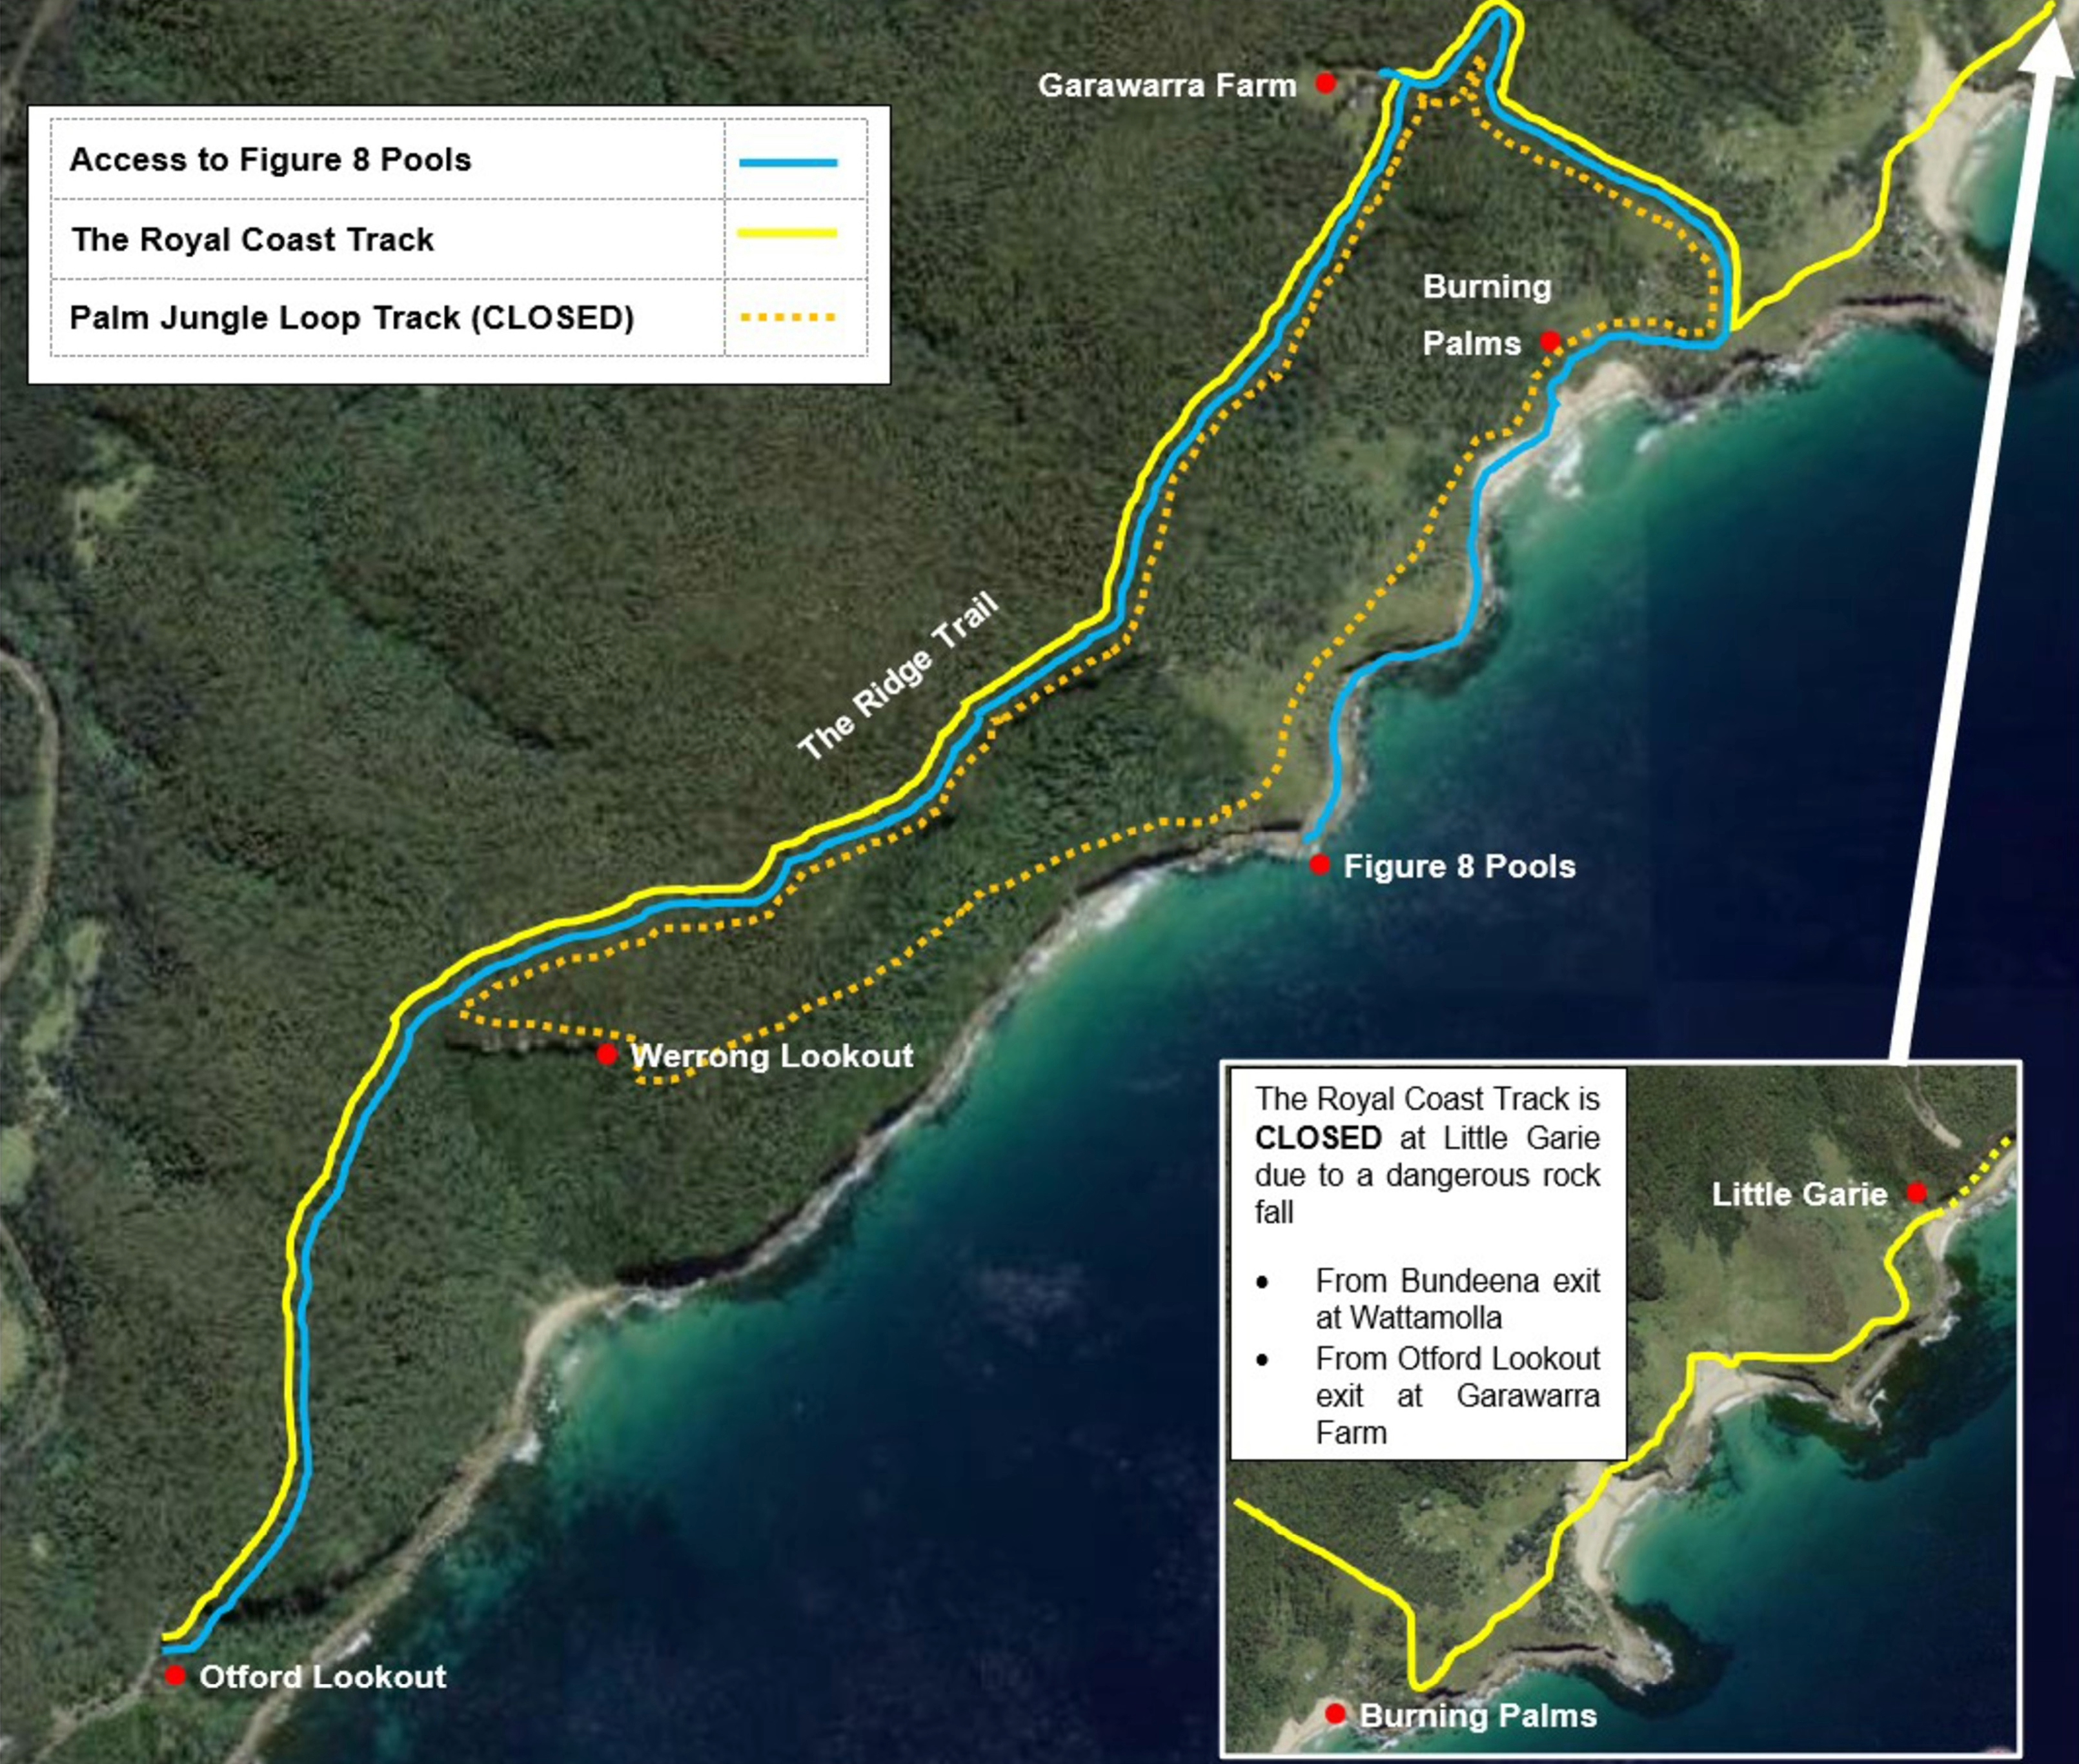 Royal Coast Track: Access to Figure 8 Pools, Palm Jungle Loop Track - Closed